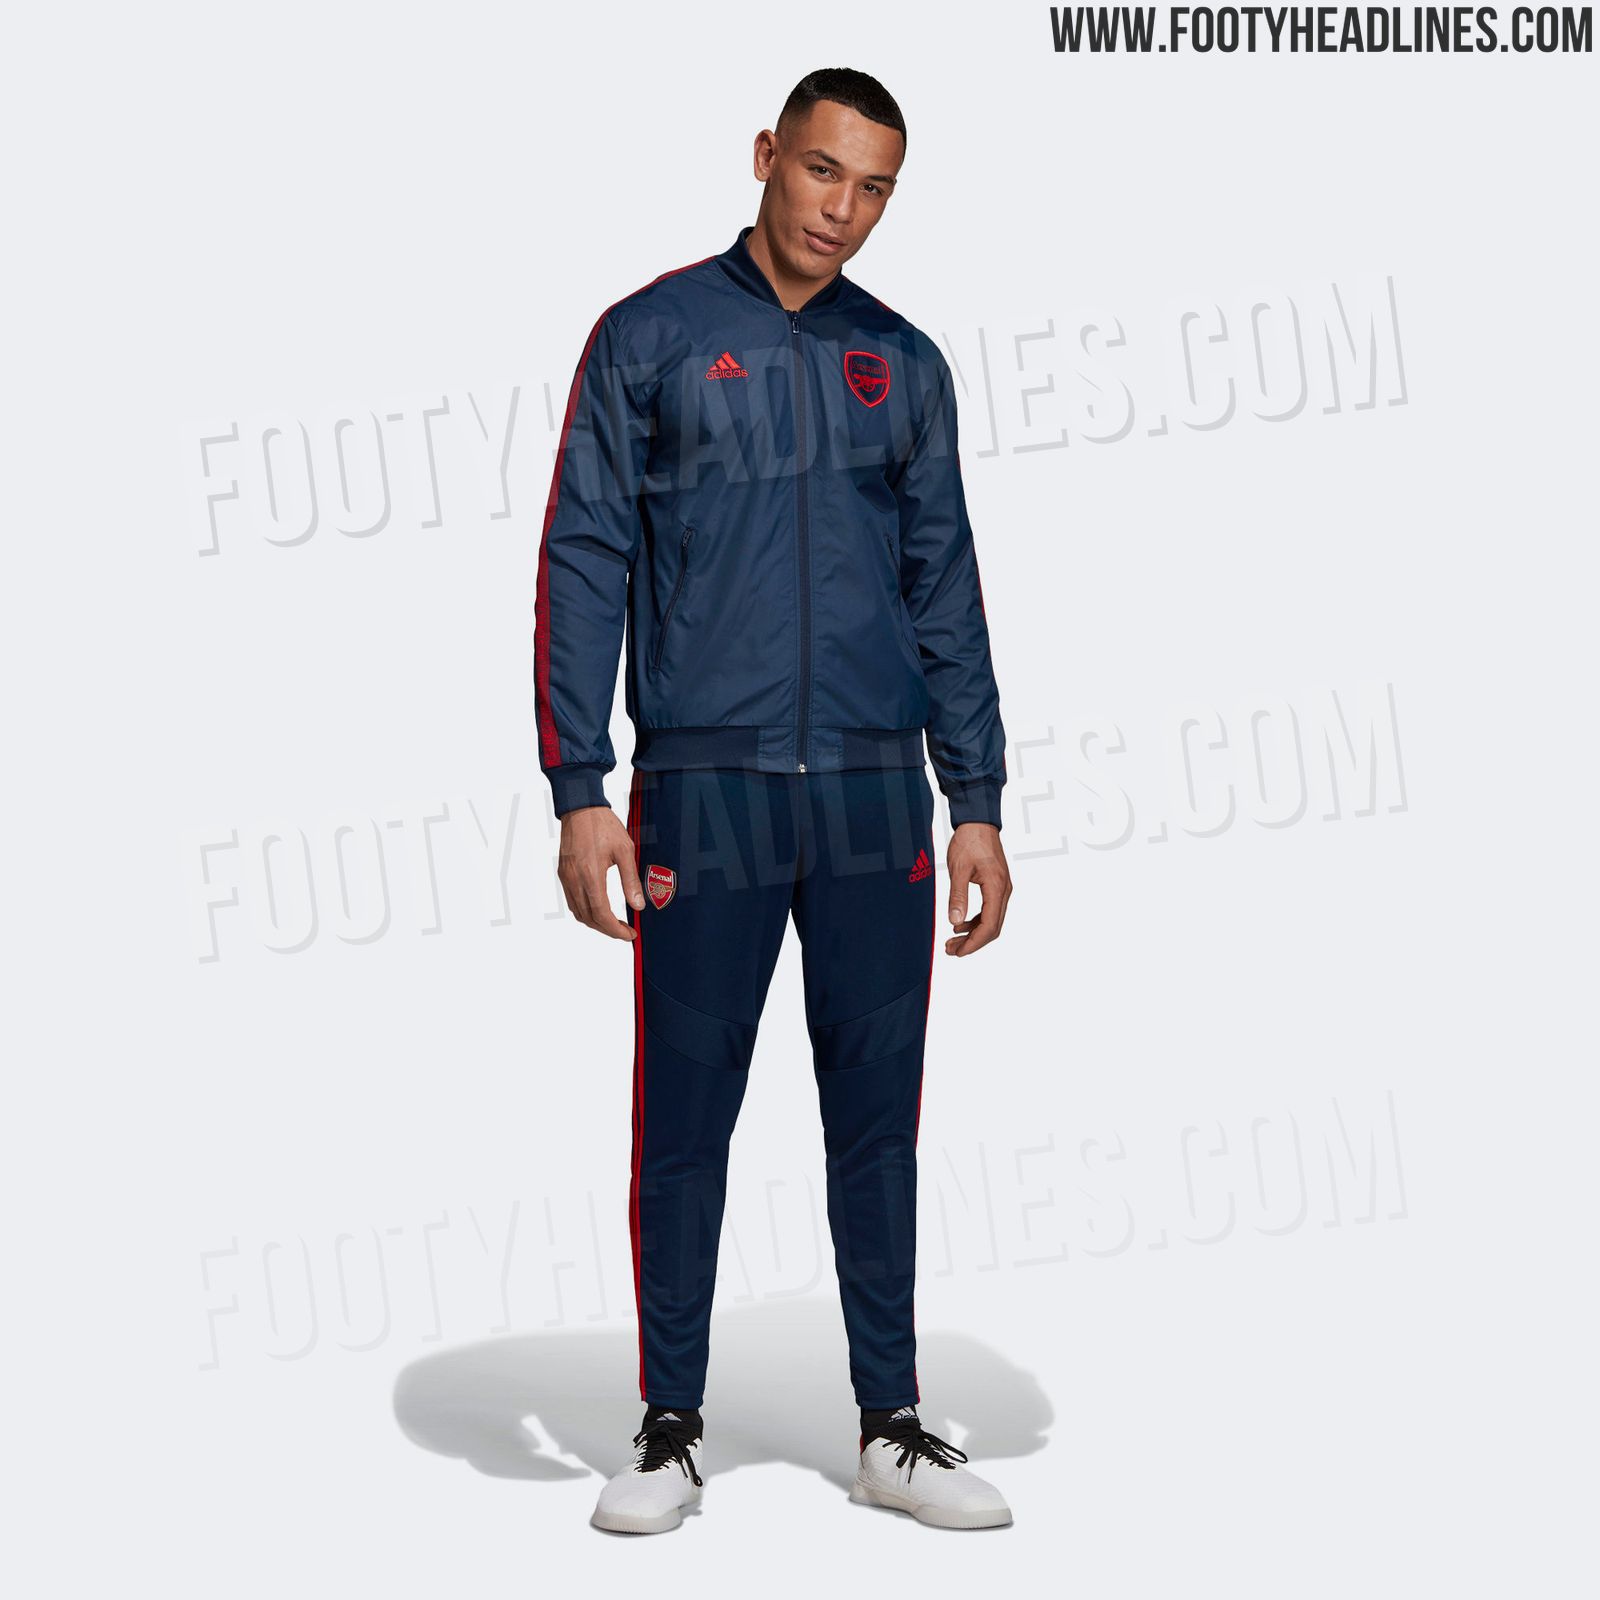 Adidas Arsenal 19-20 Anthem Jacket Leaked - Footy Headlines